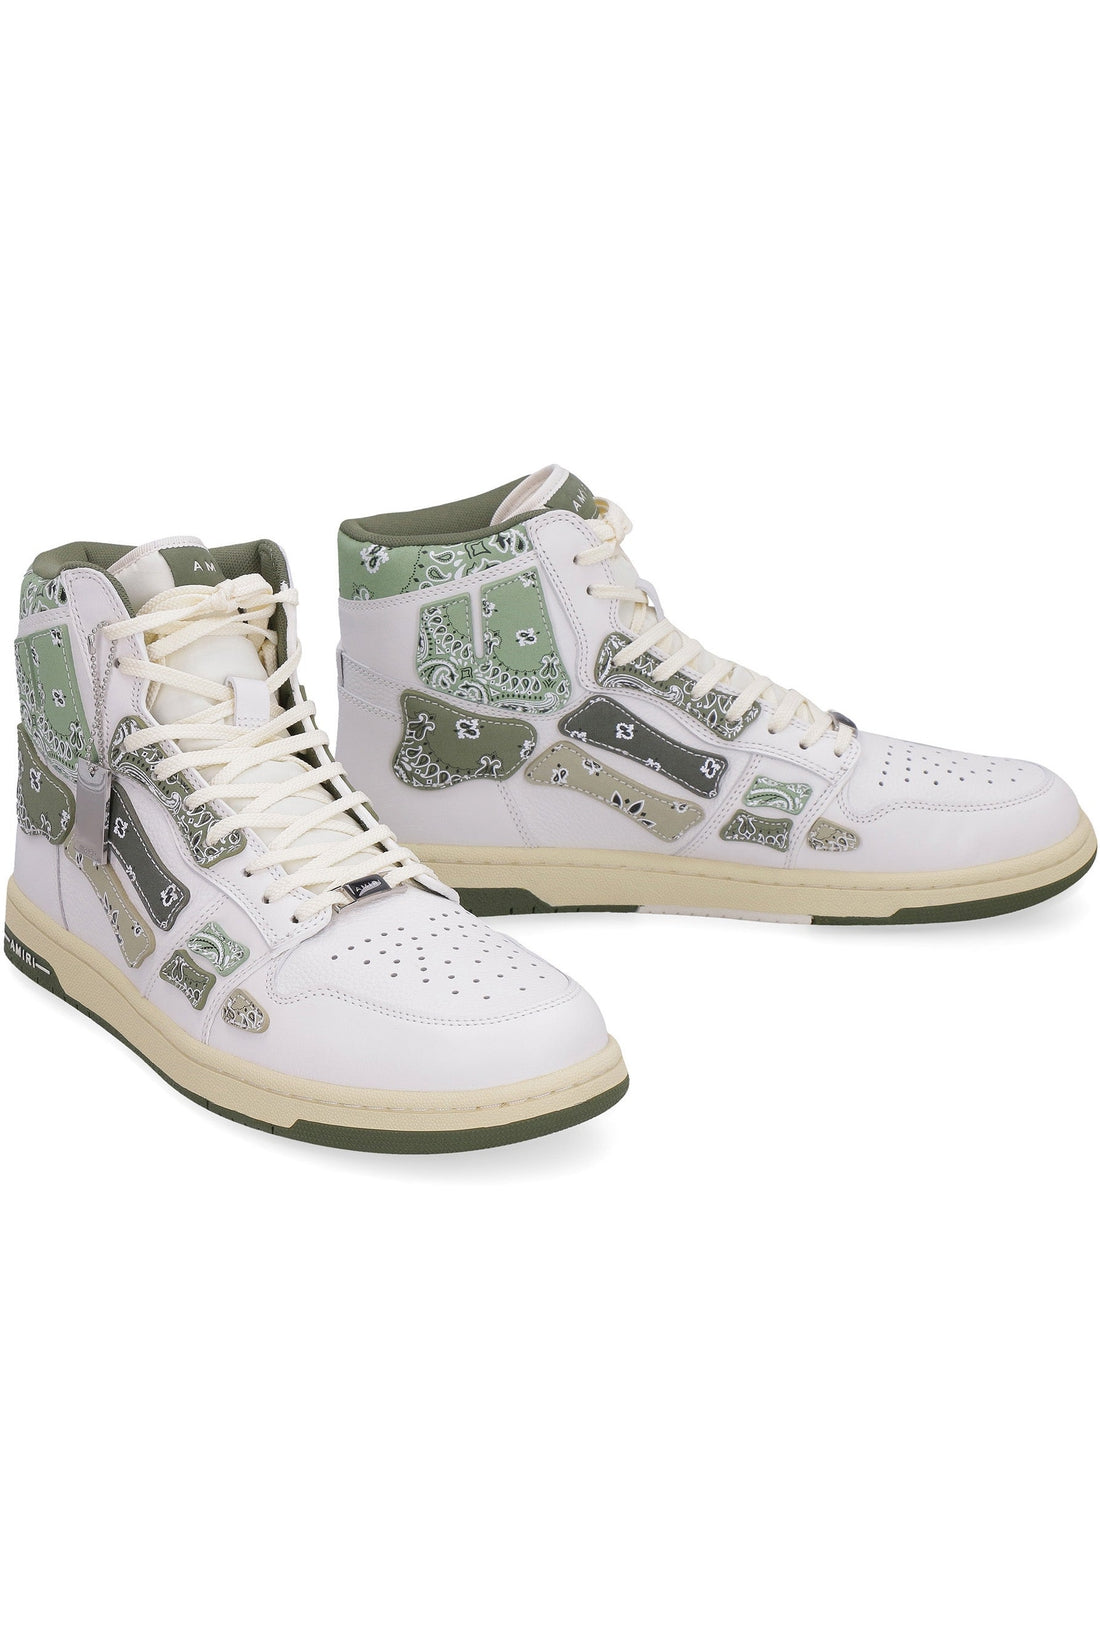 AMIRI-OUTLET-SALE-Bandana Skel High-top sneakers-ARCHIVIST